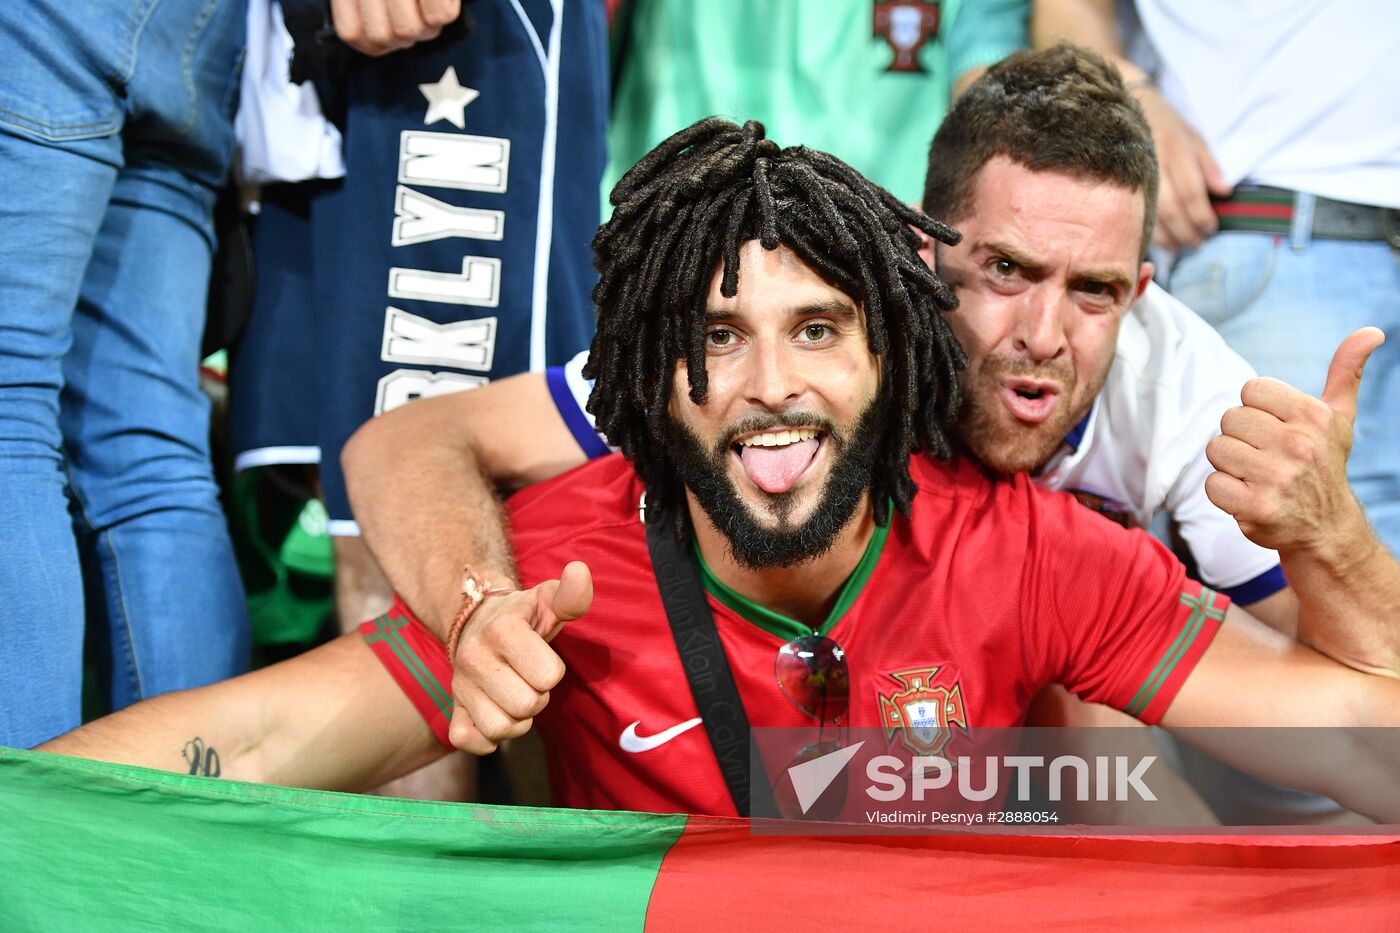 UEFA Euro 2016. Portugal vs. Wales